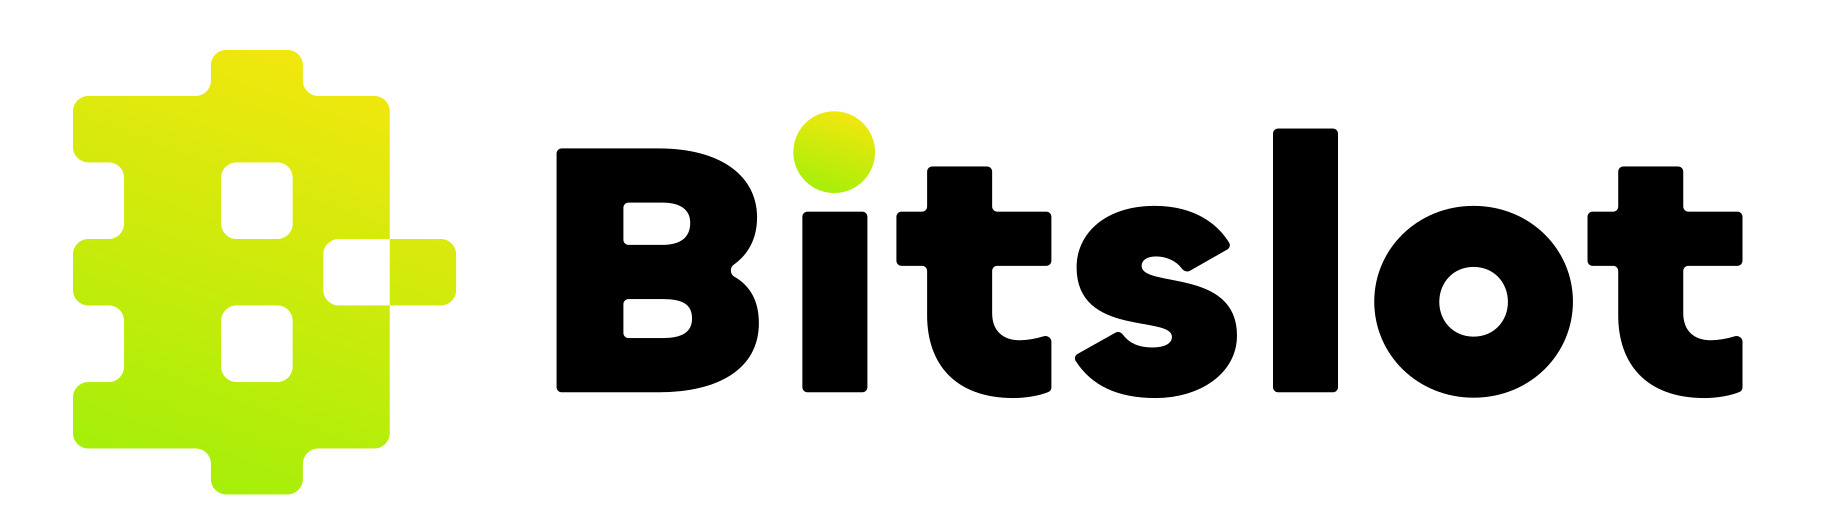 Bitslot Casino Logo